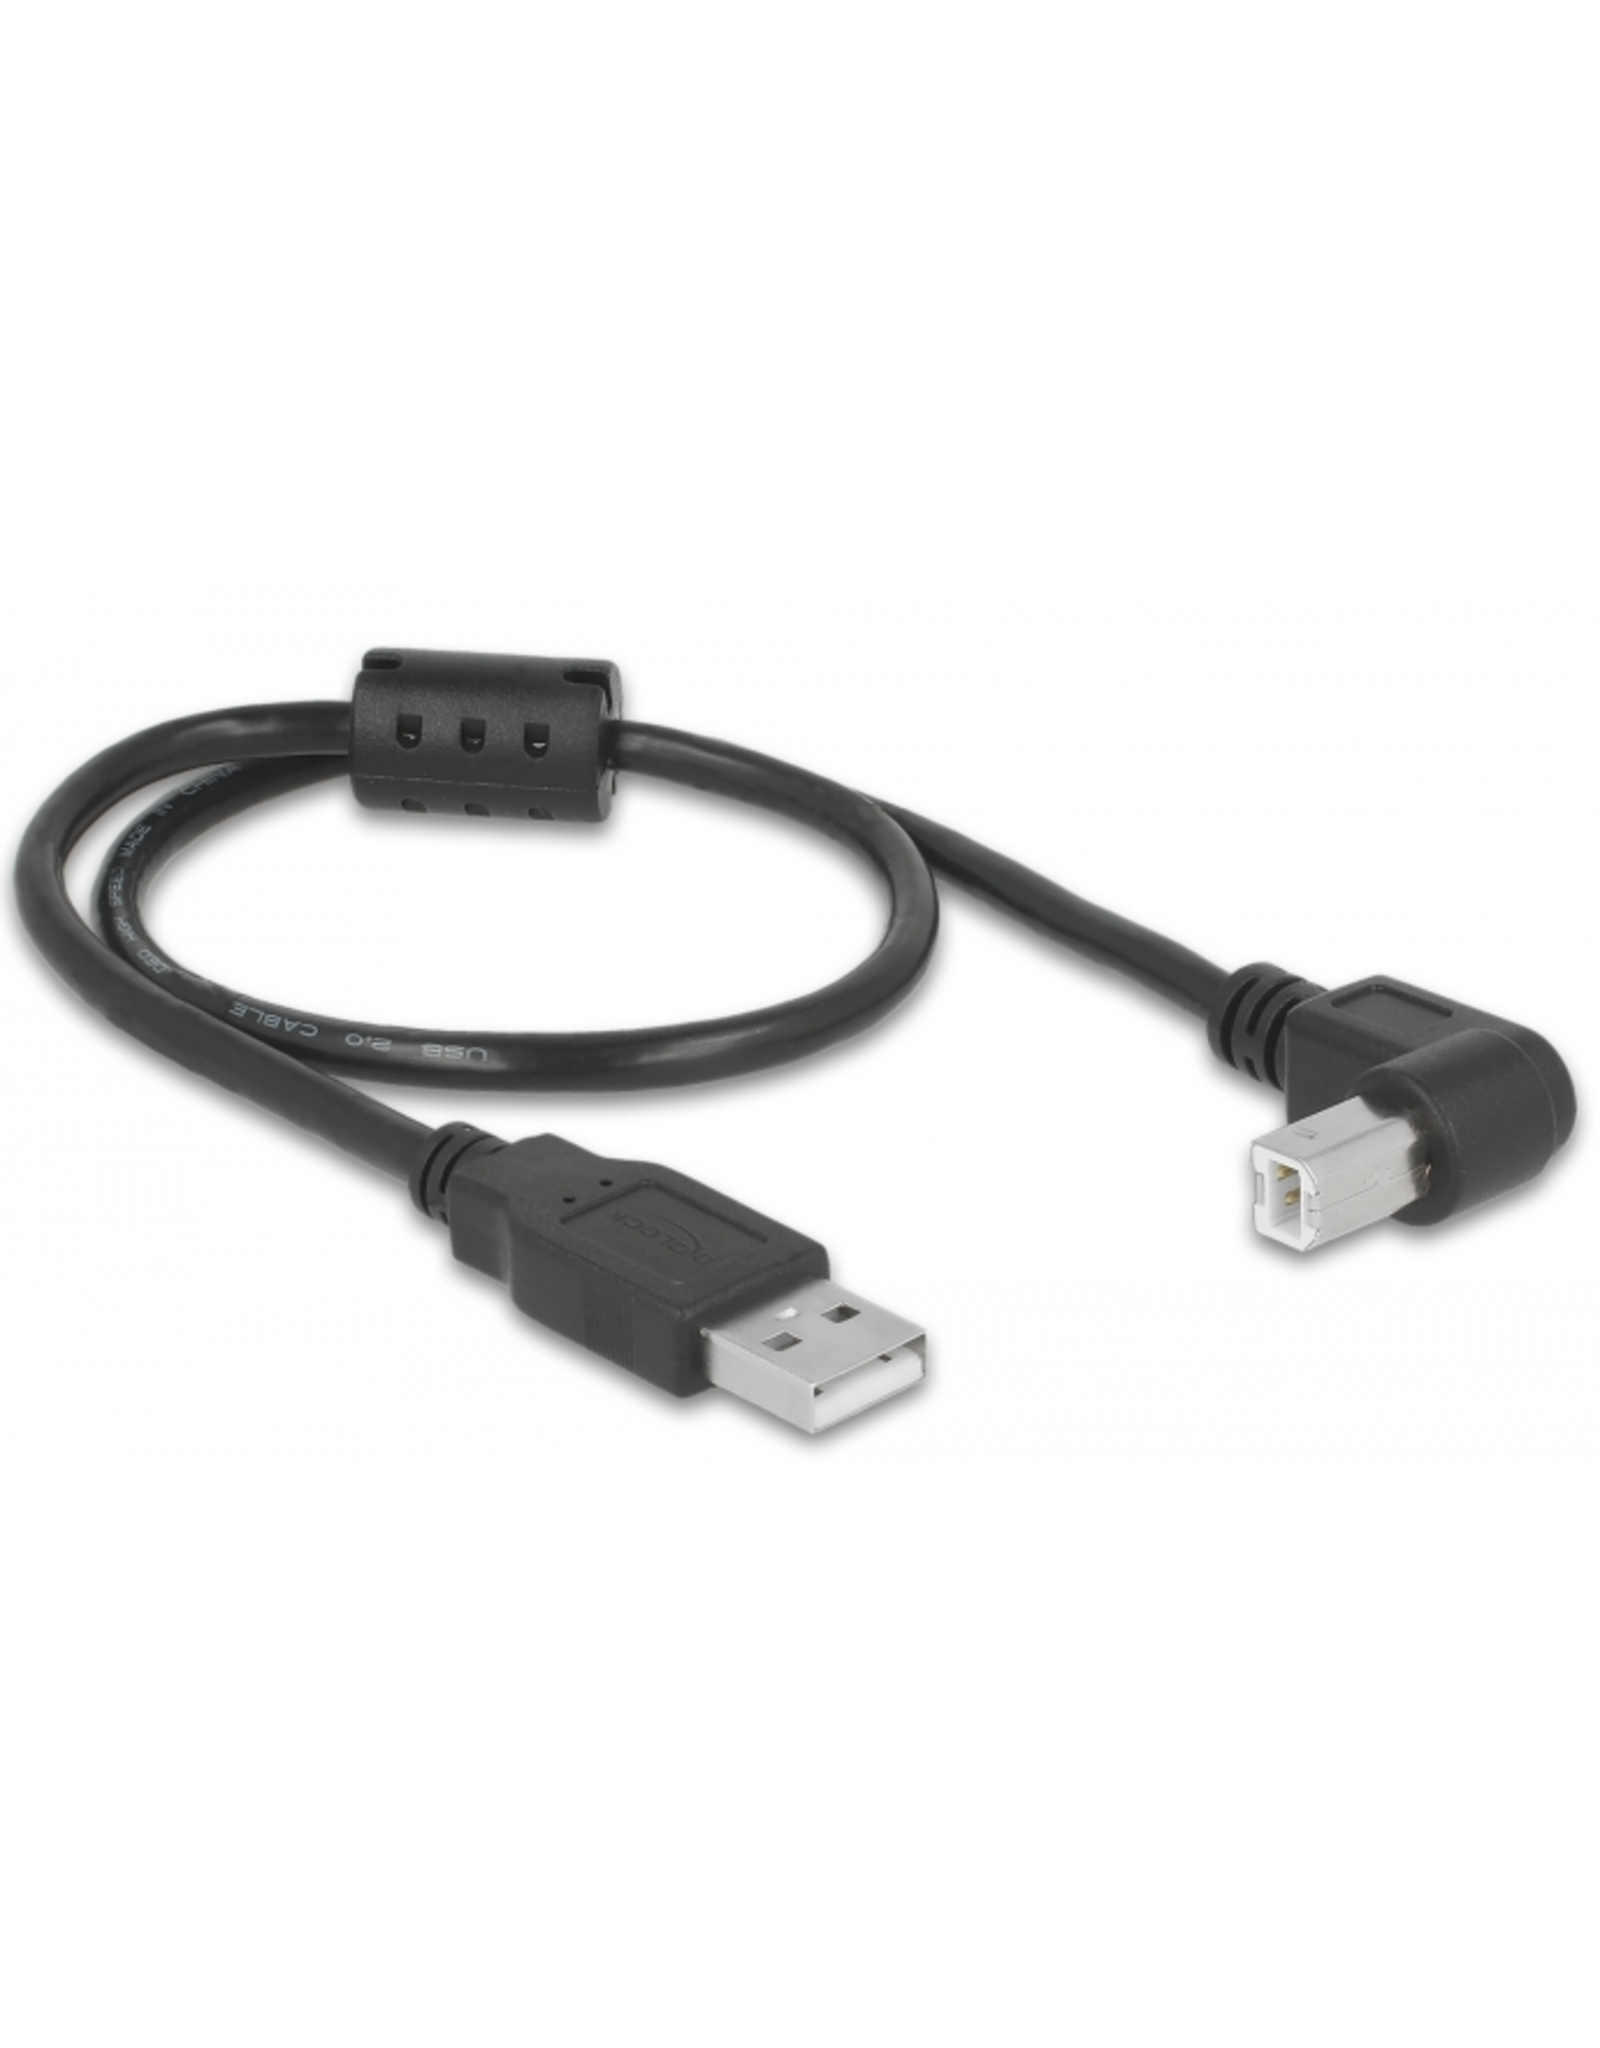 Pegasus Astro Pegasus Astro USB 2.0 Type-A male > USB 2.0 Type-B male angled 05 m black Premium USB Cable Pack of 2  #USB2B-05M